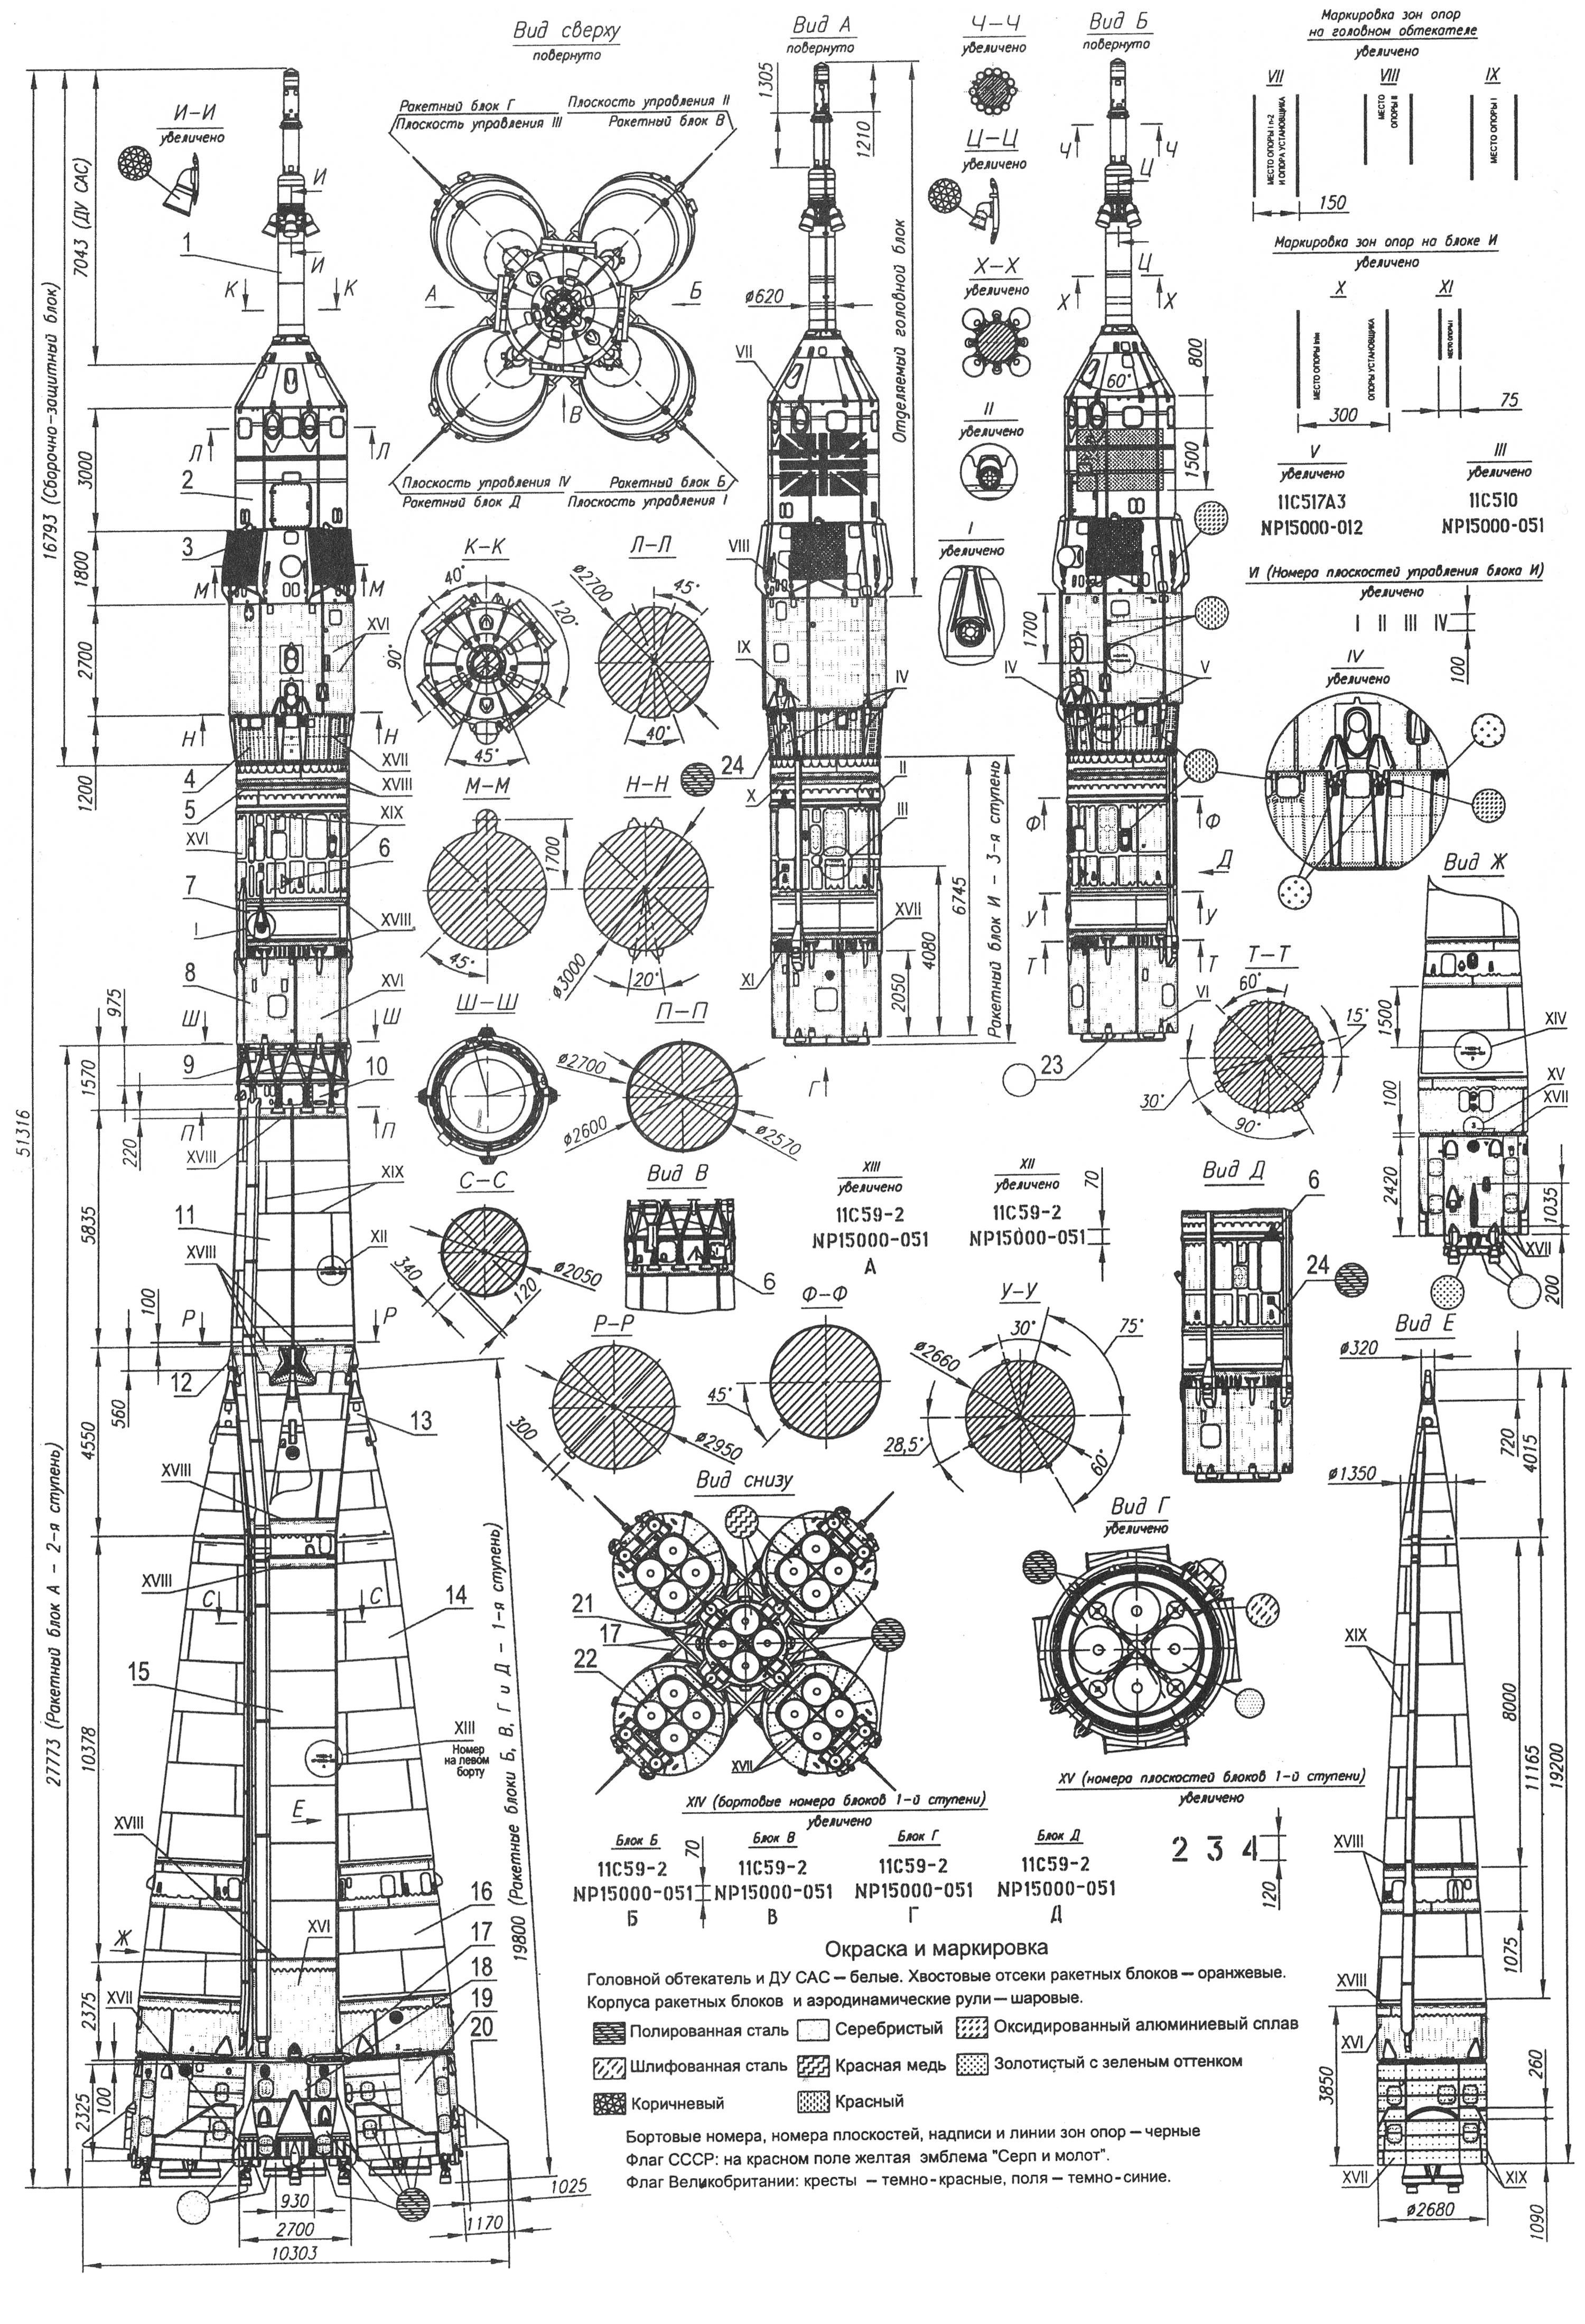 чертежи, Союз, ракета, ракета-носитель, схема, Союз ТМА - обои на рабочий стол